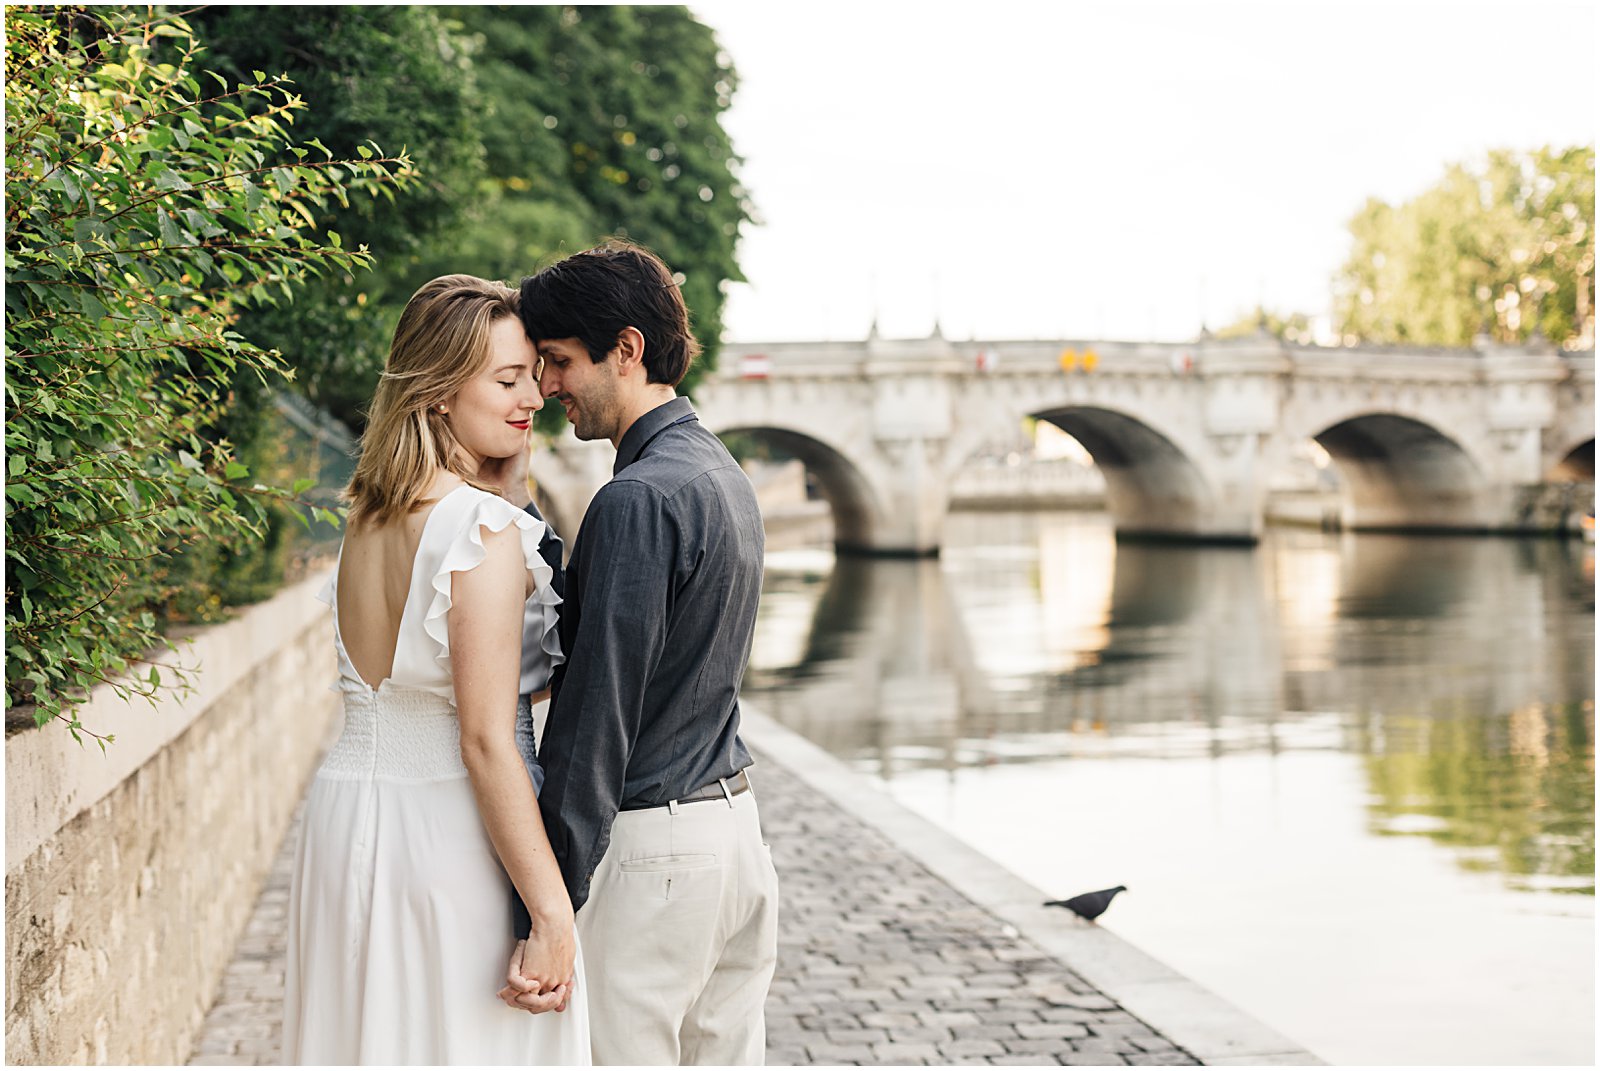 Pont Neuf Sunrise Romantic Couples Session in Paris France